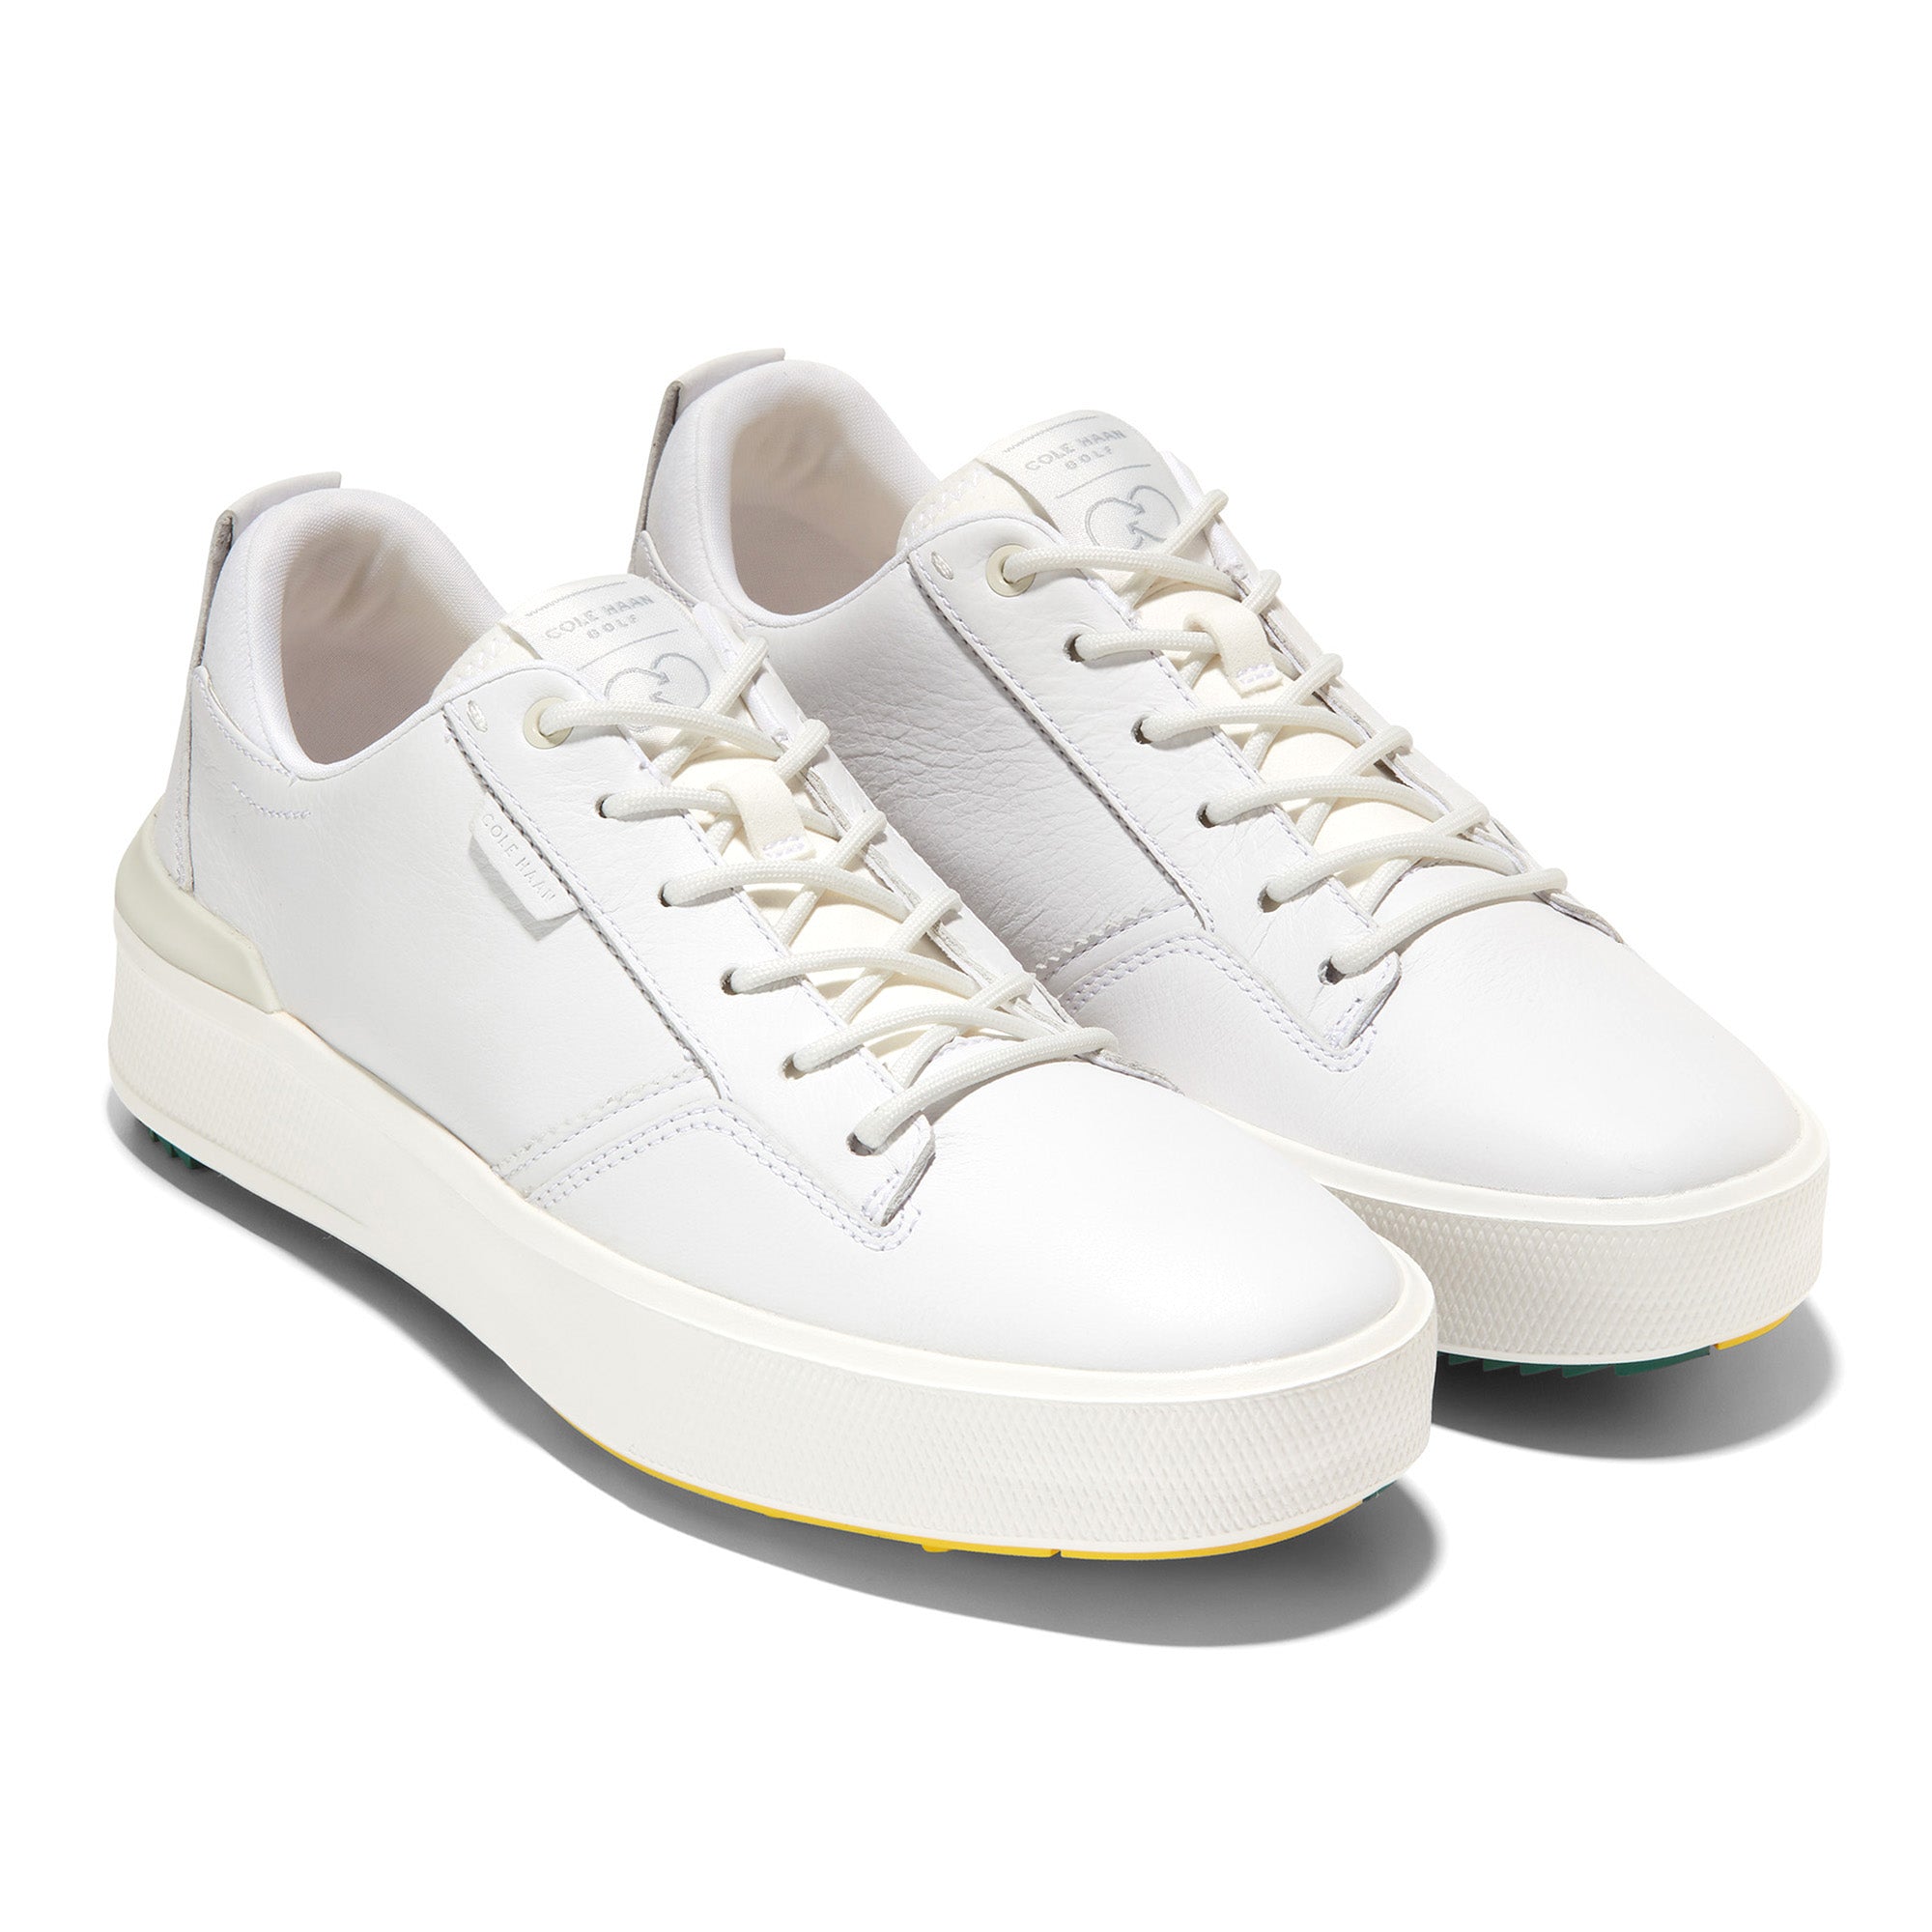 cole-haan-grandpro-crew-golf-shoes-c37537-white-aventurine-white-leather